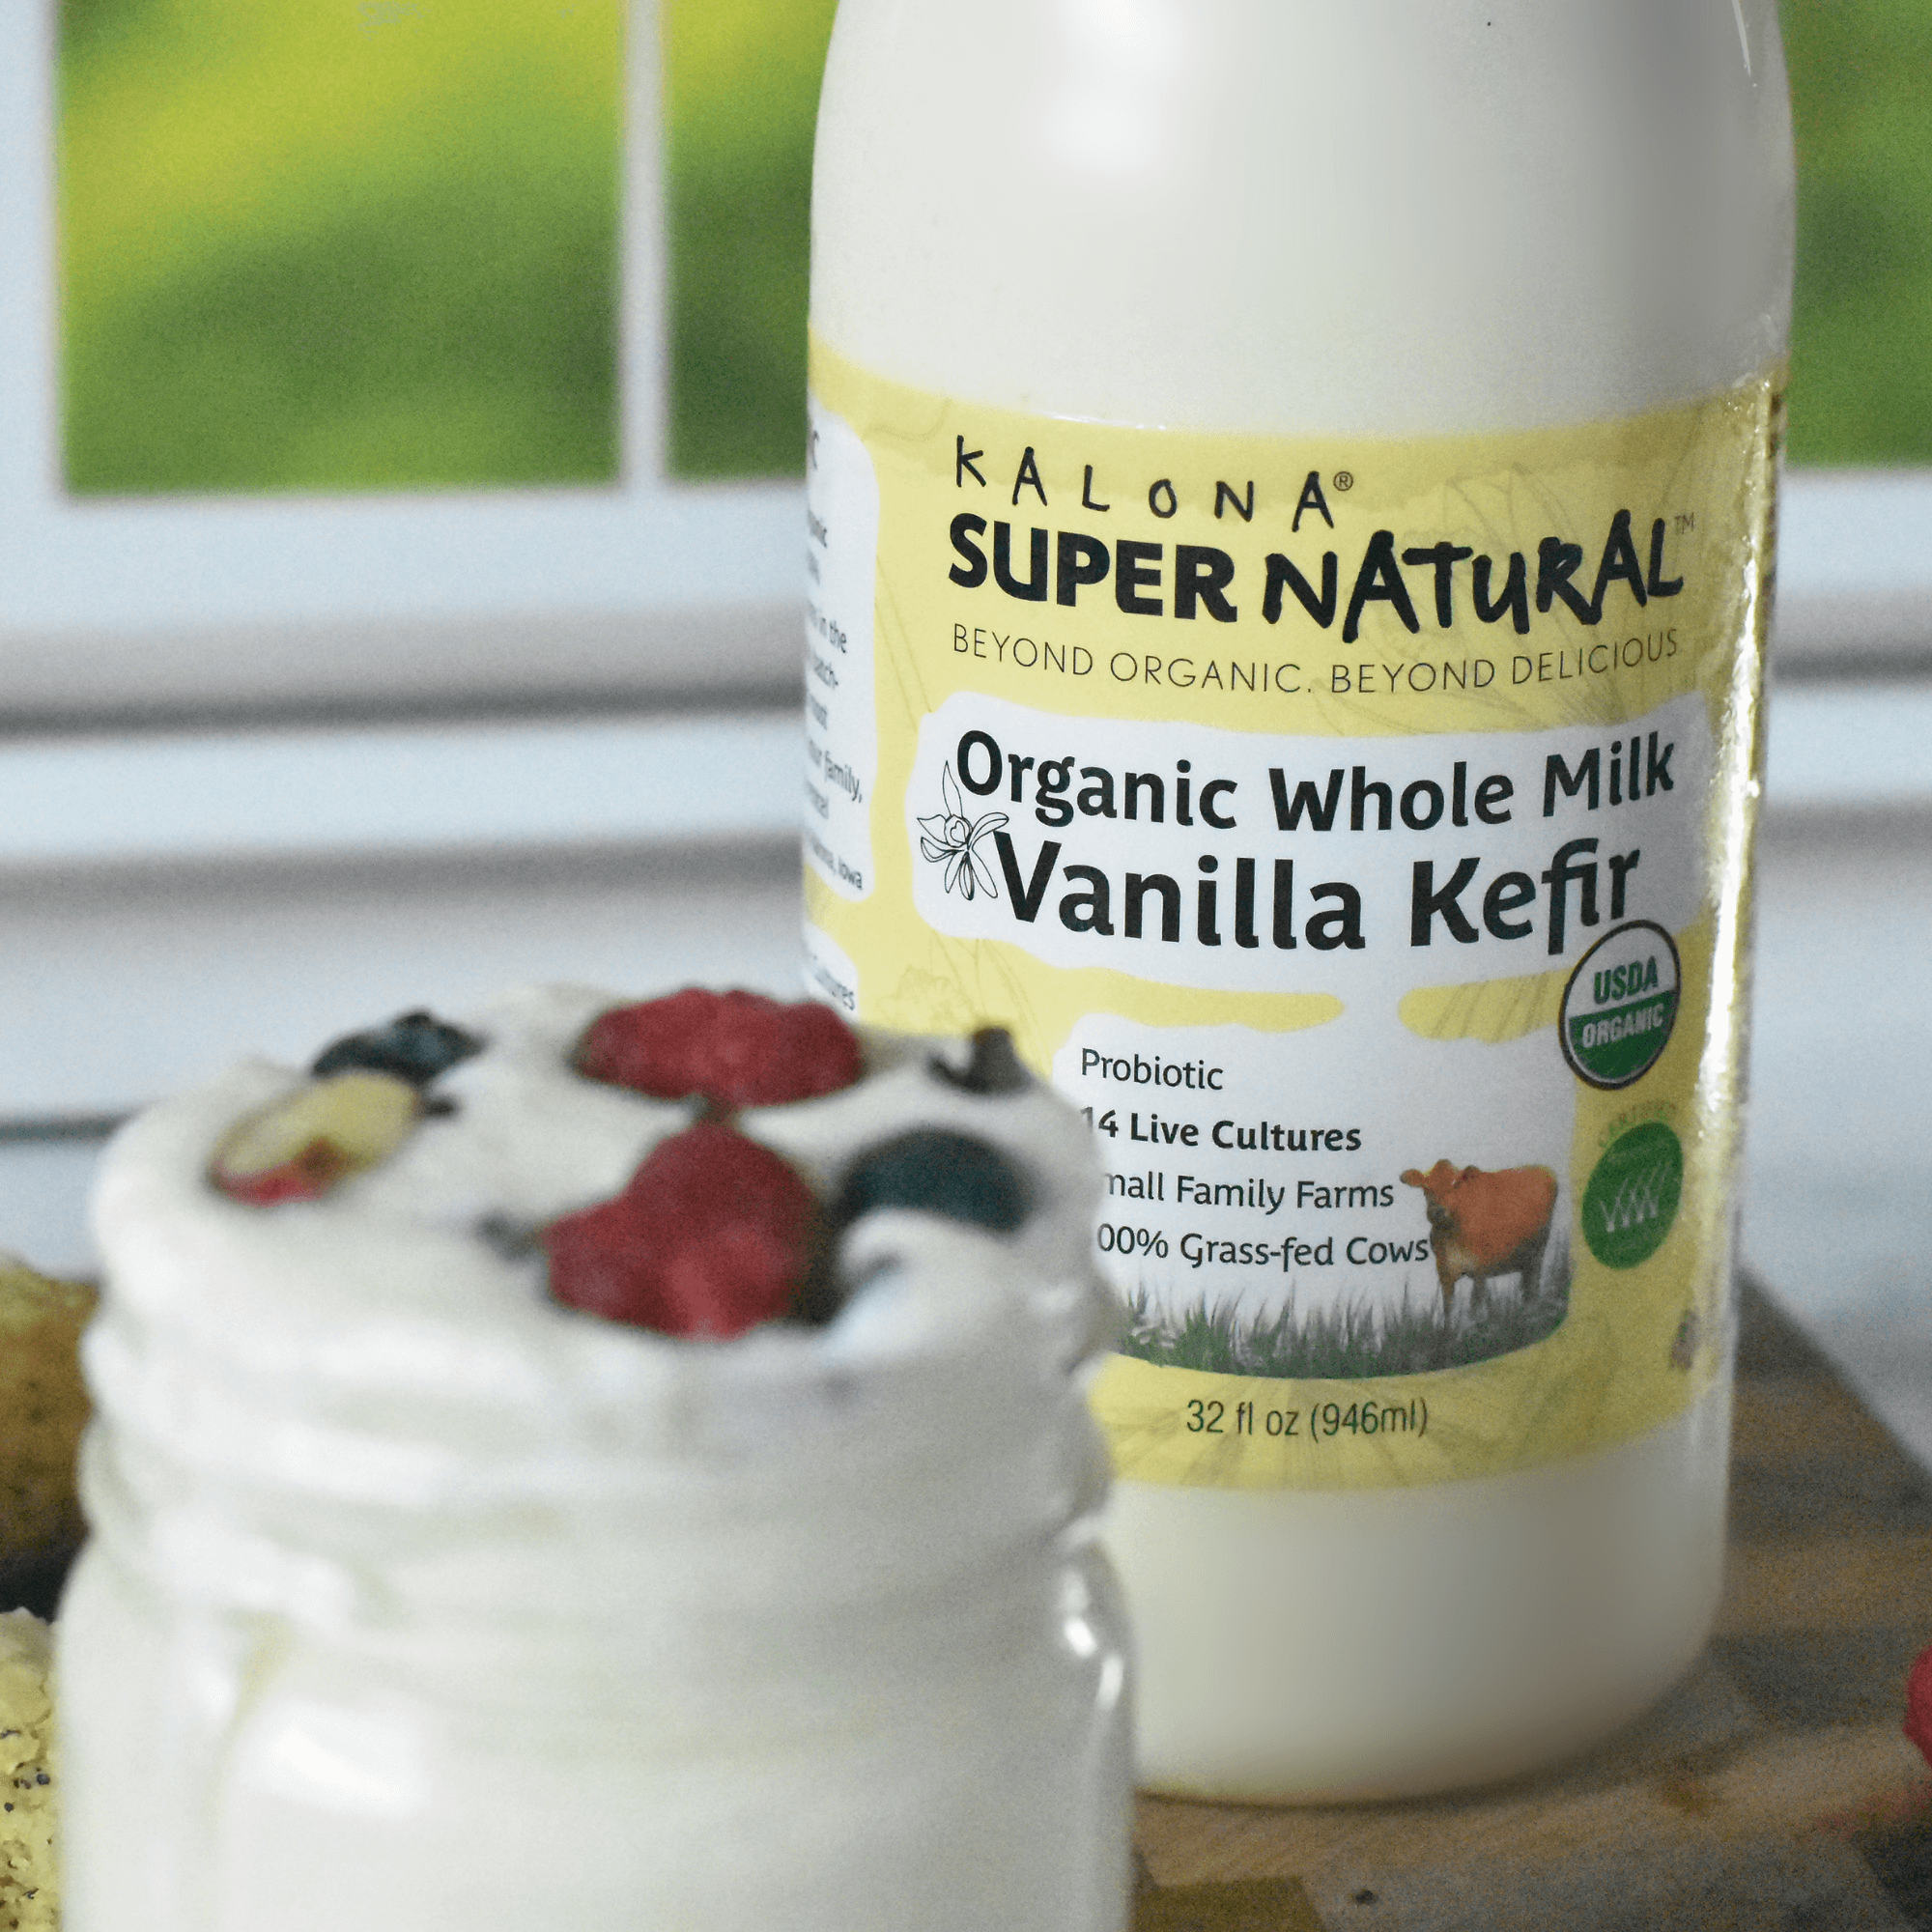 Organic Whole Milk Plain Kefir